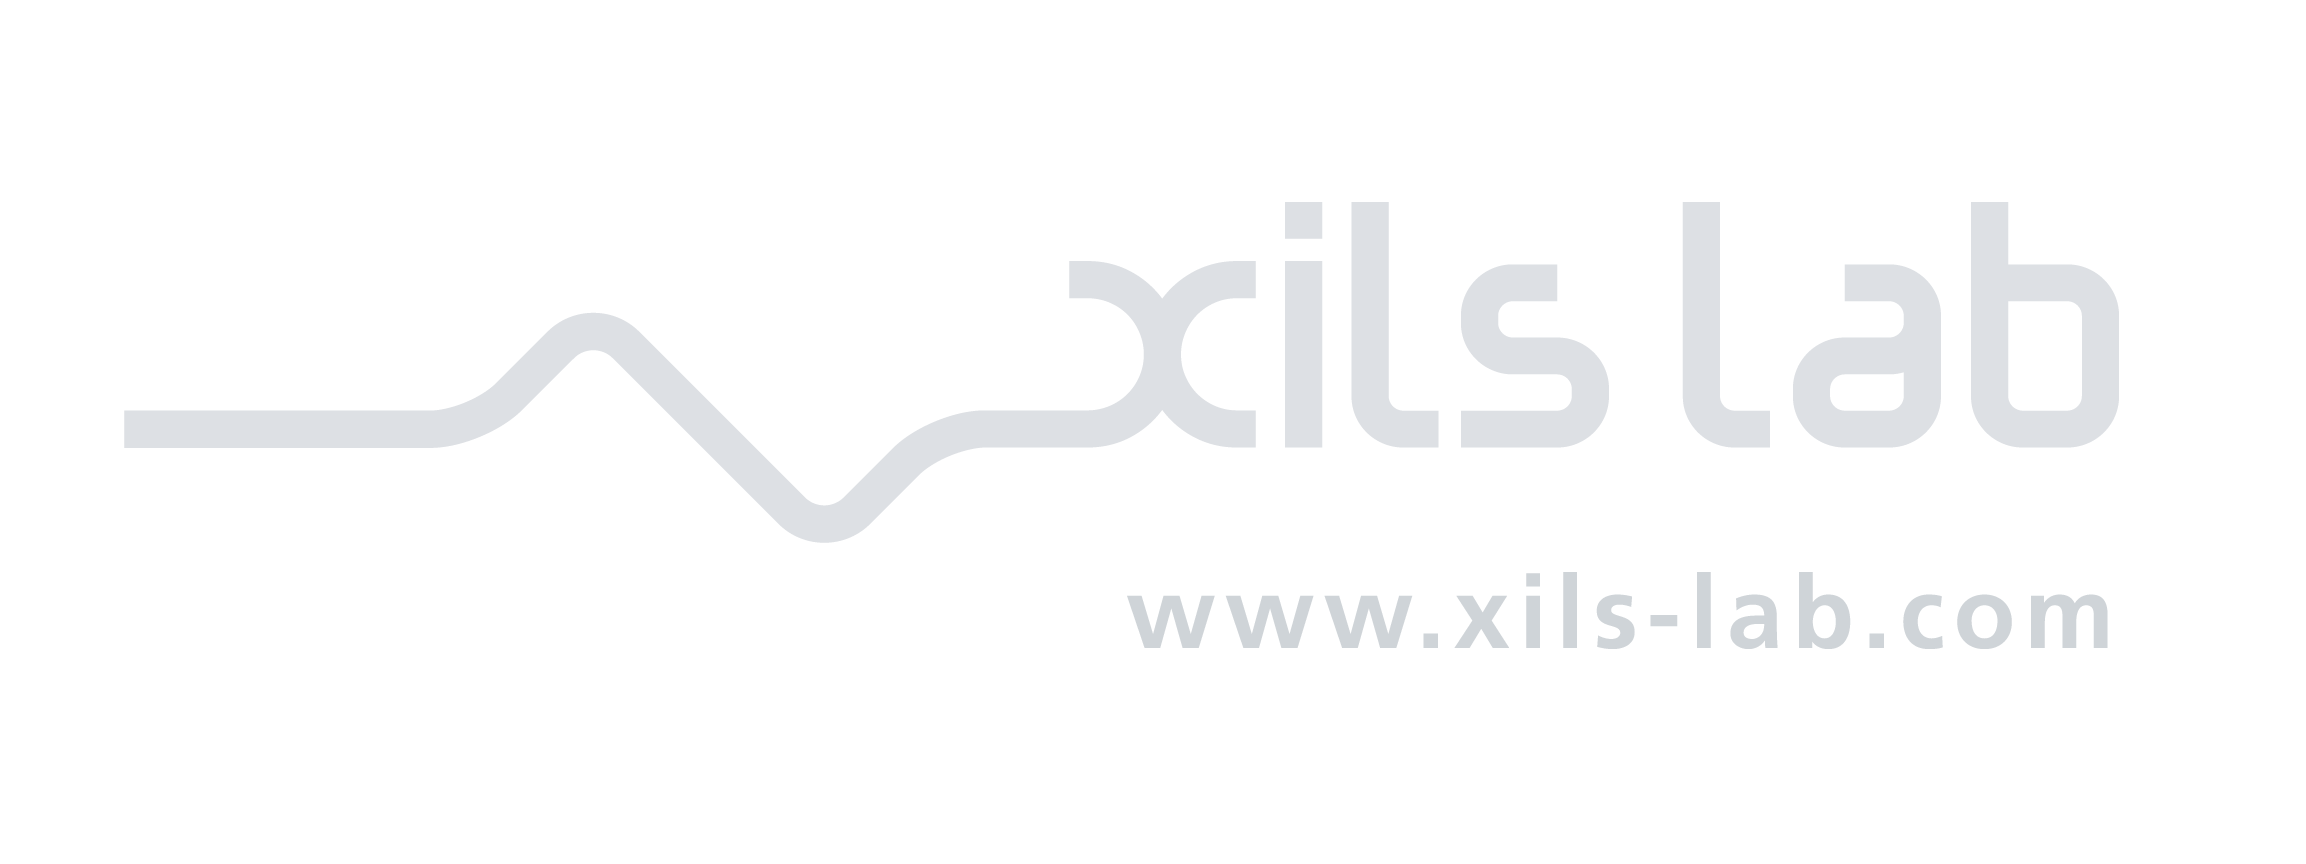 xils-lab